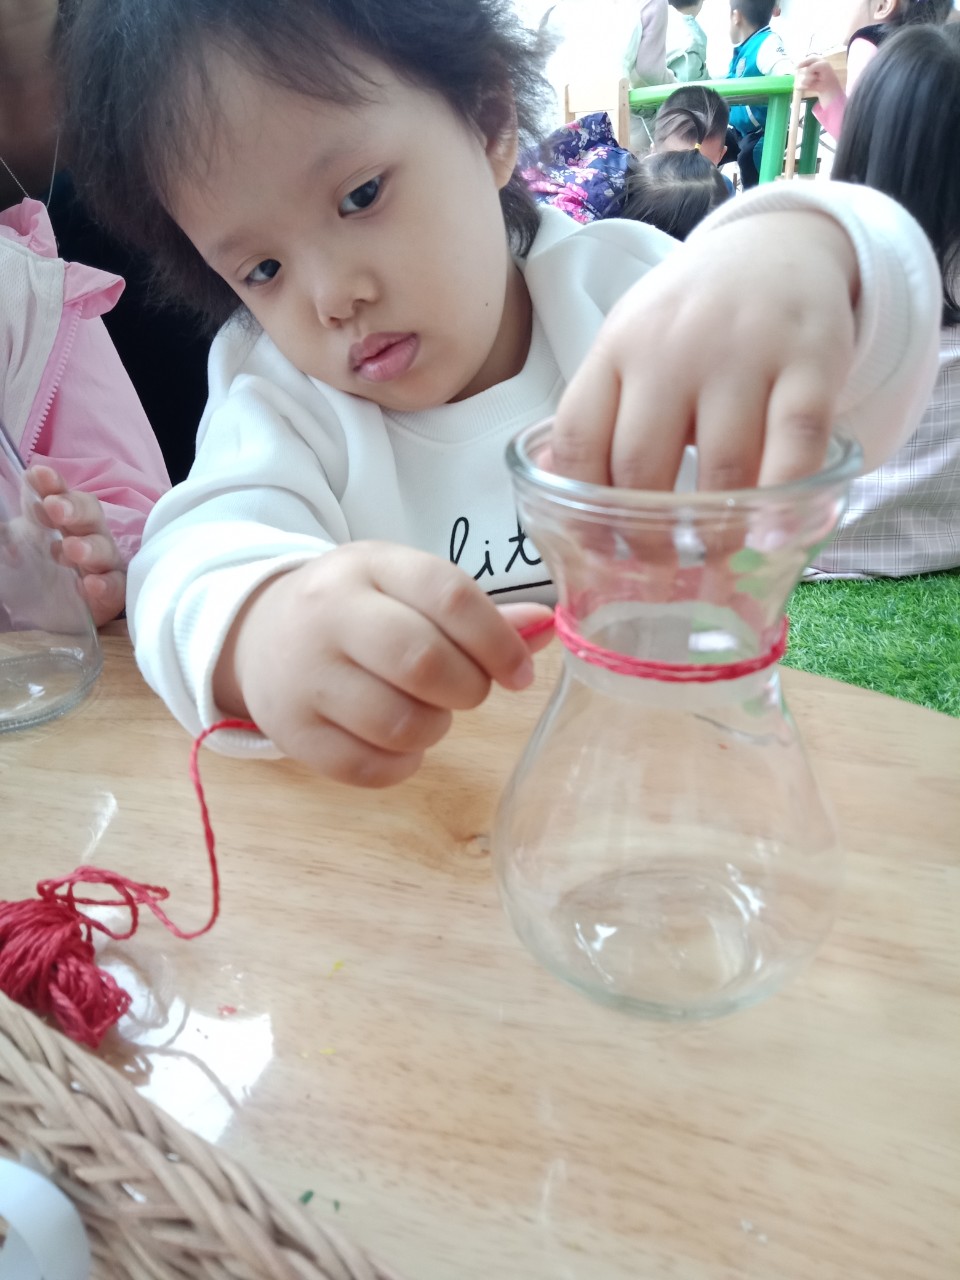 Tìm hiểu "Montessori" (cho trẻ từ 3-6 tuổi)